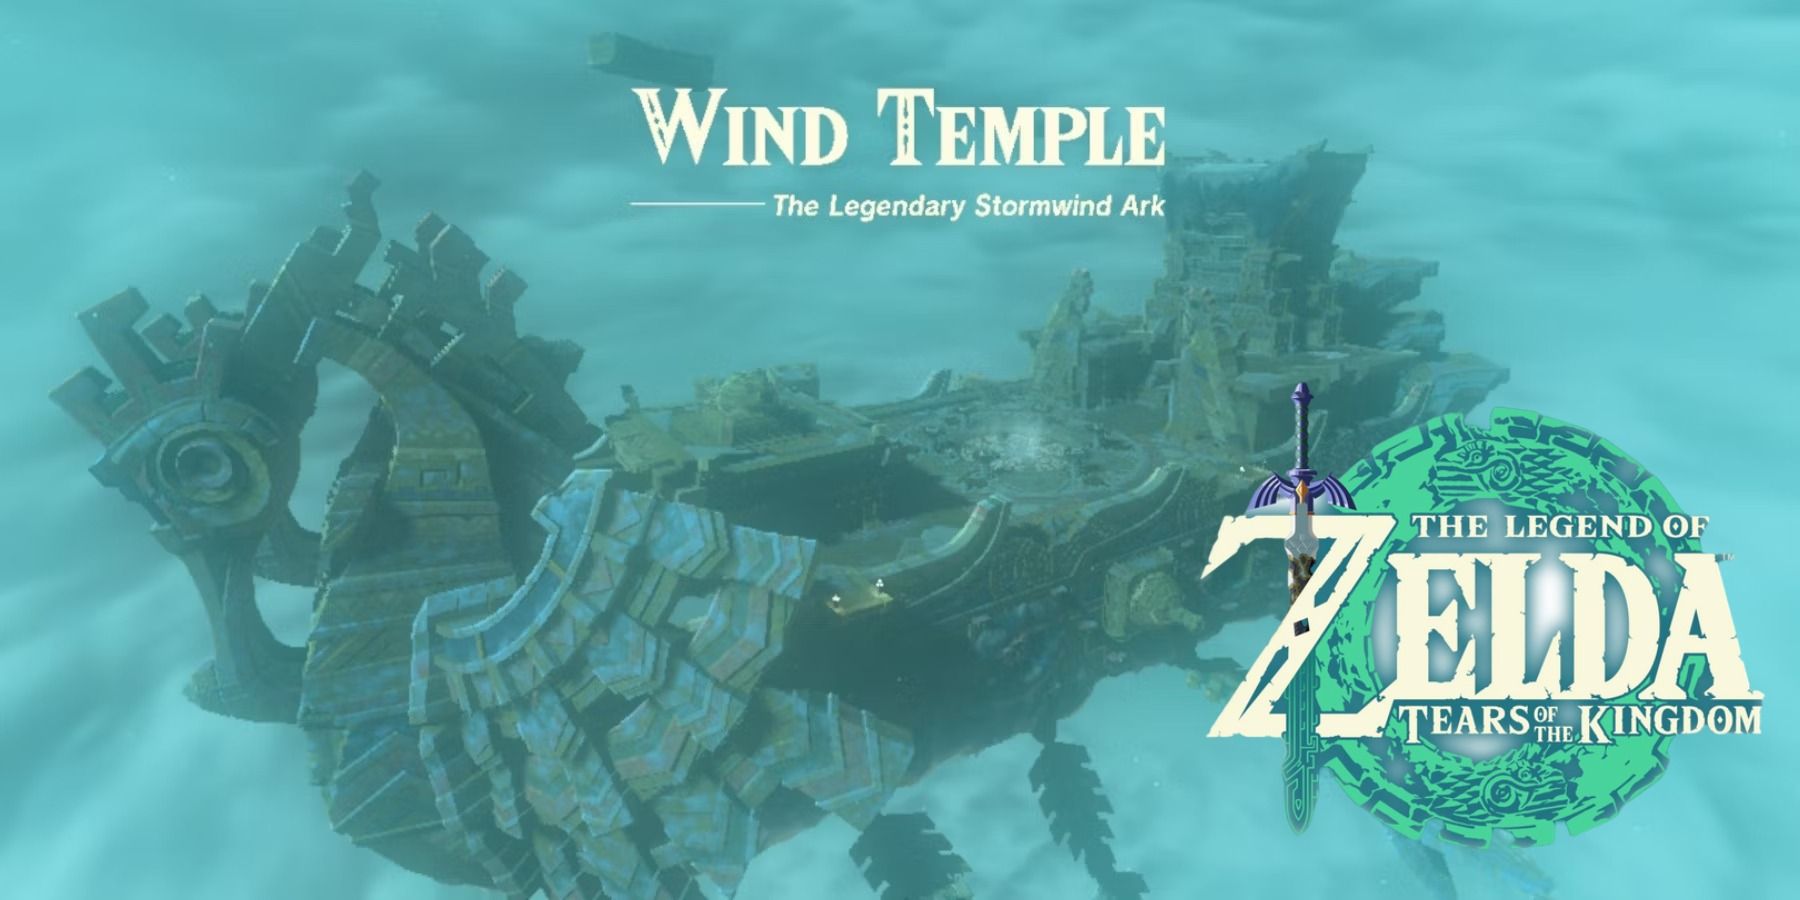 Wind temple totk